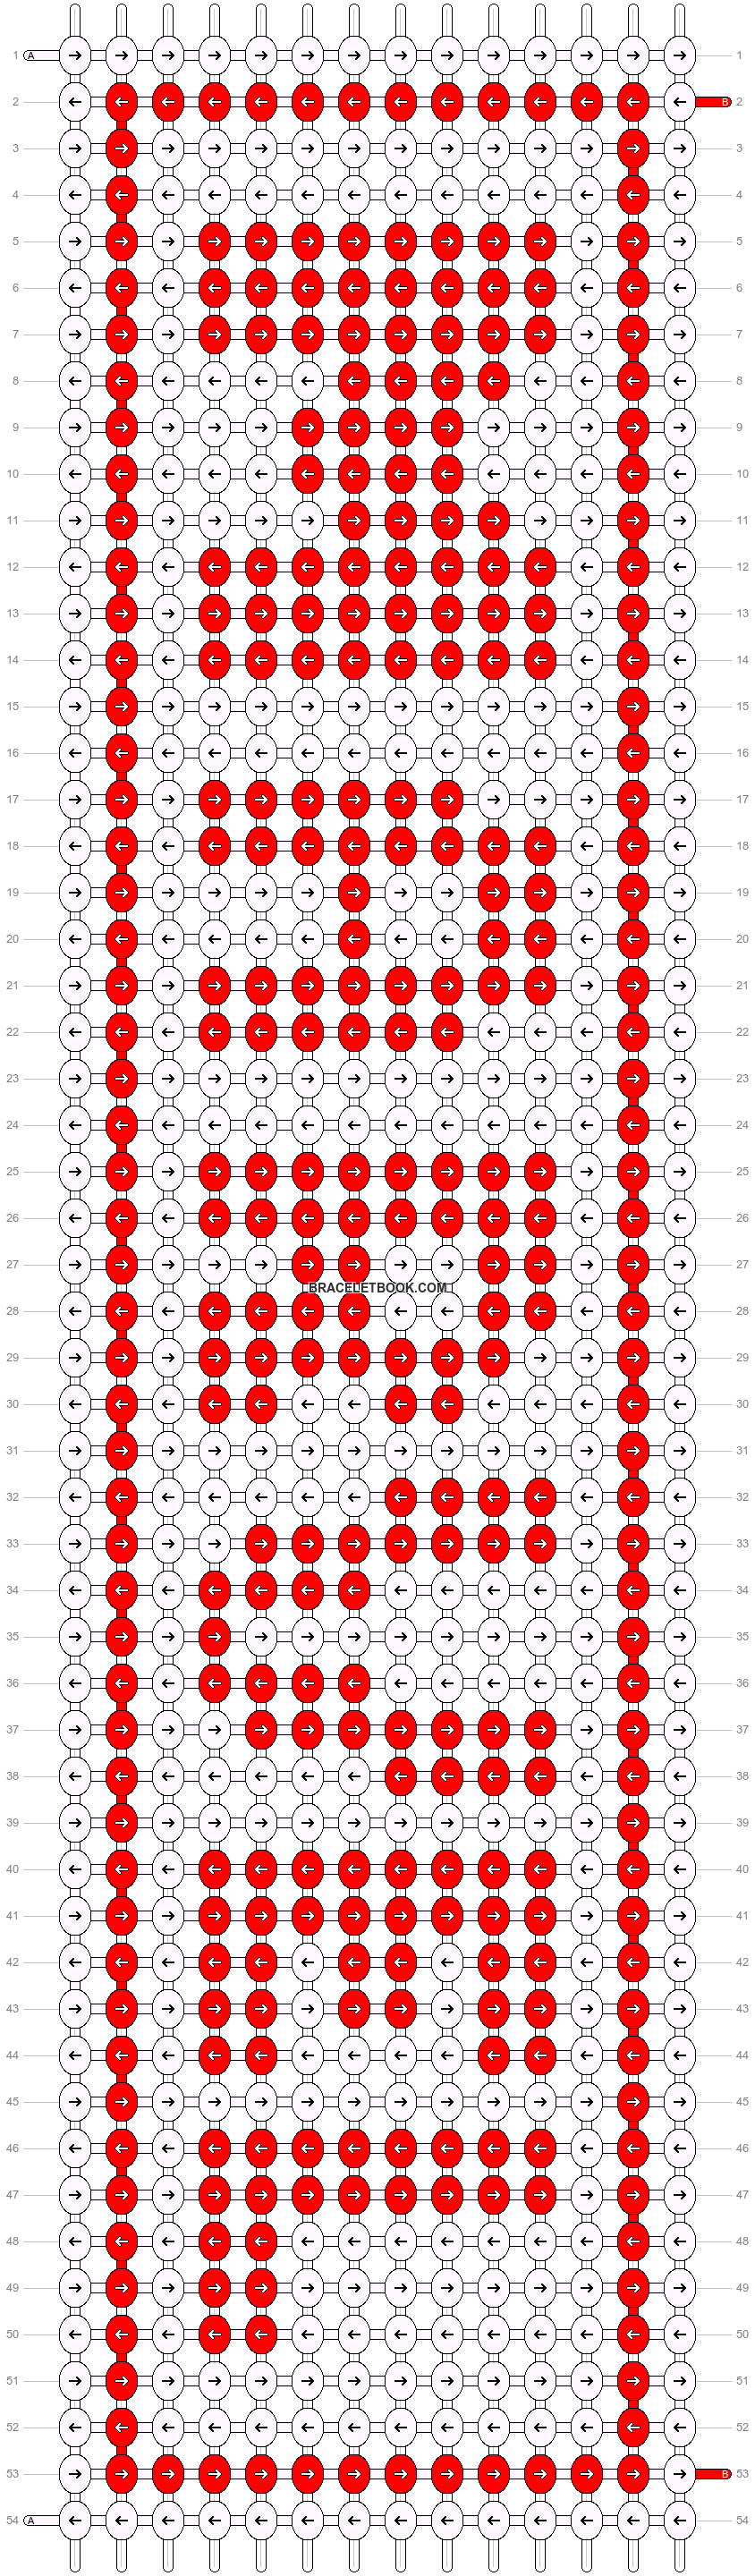 Alpha pattern #56574 variation #130199 pattern